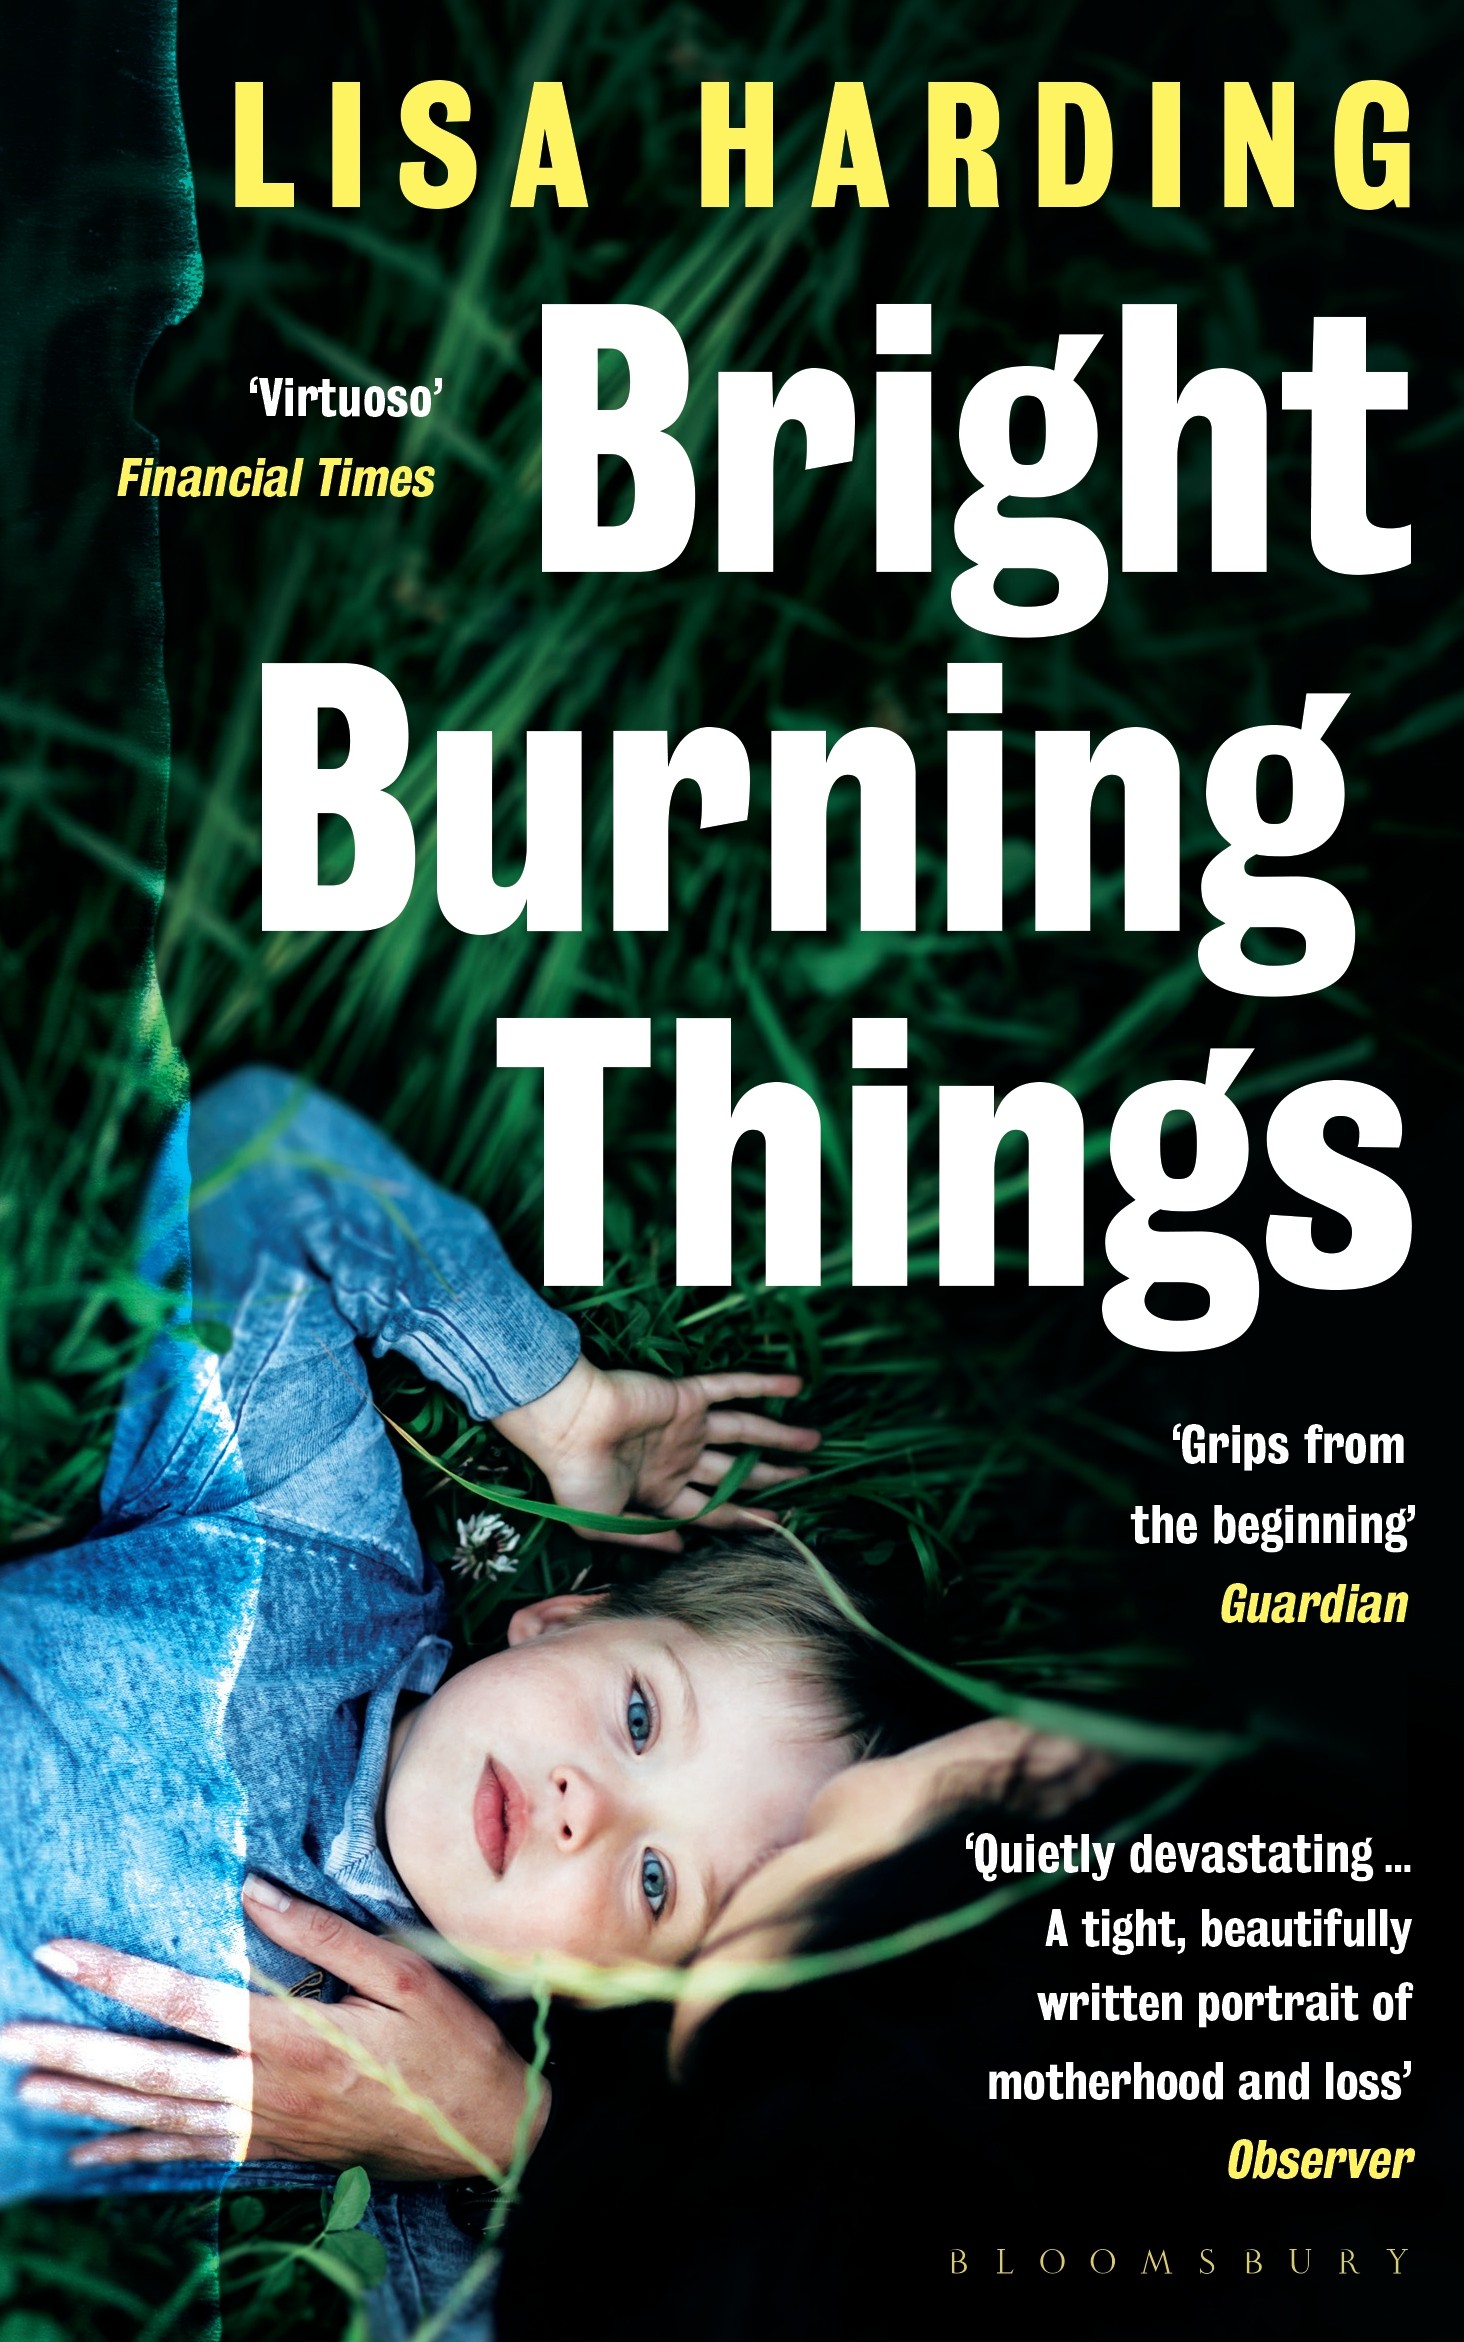 Bright Burning Things by Lisa Harding